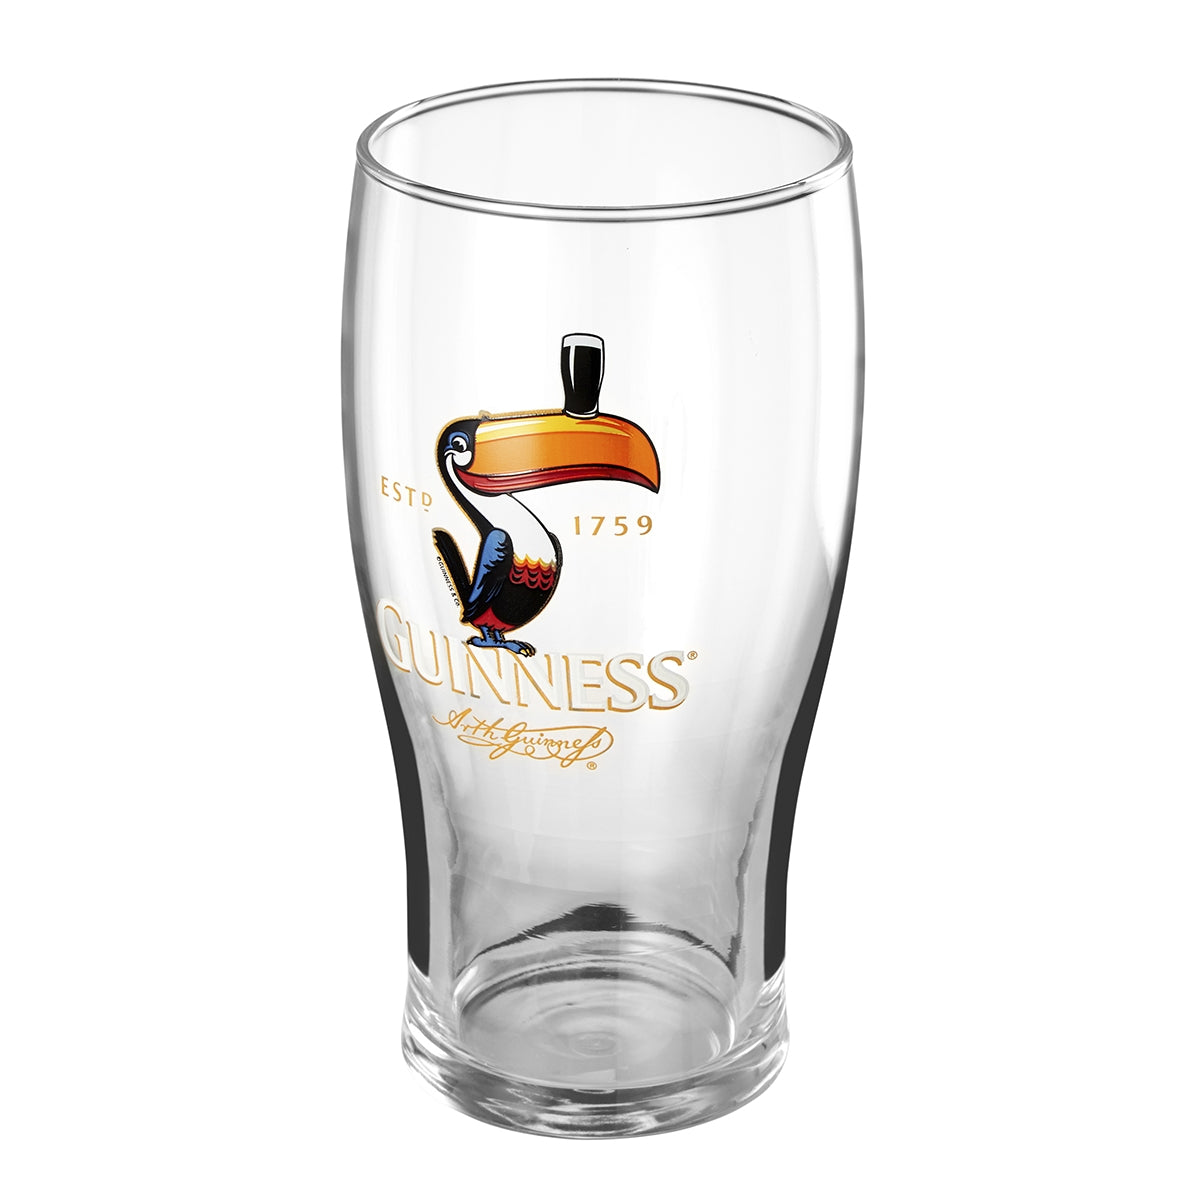 Guinness Toucan Pint Glass 24 Pack